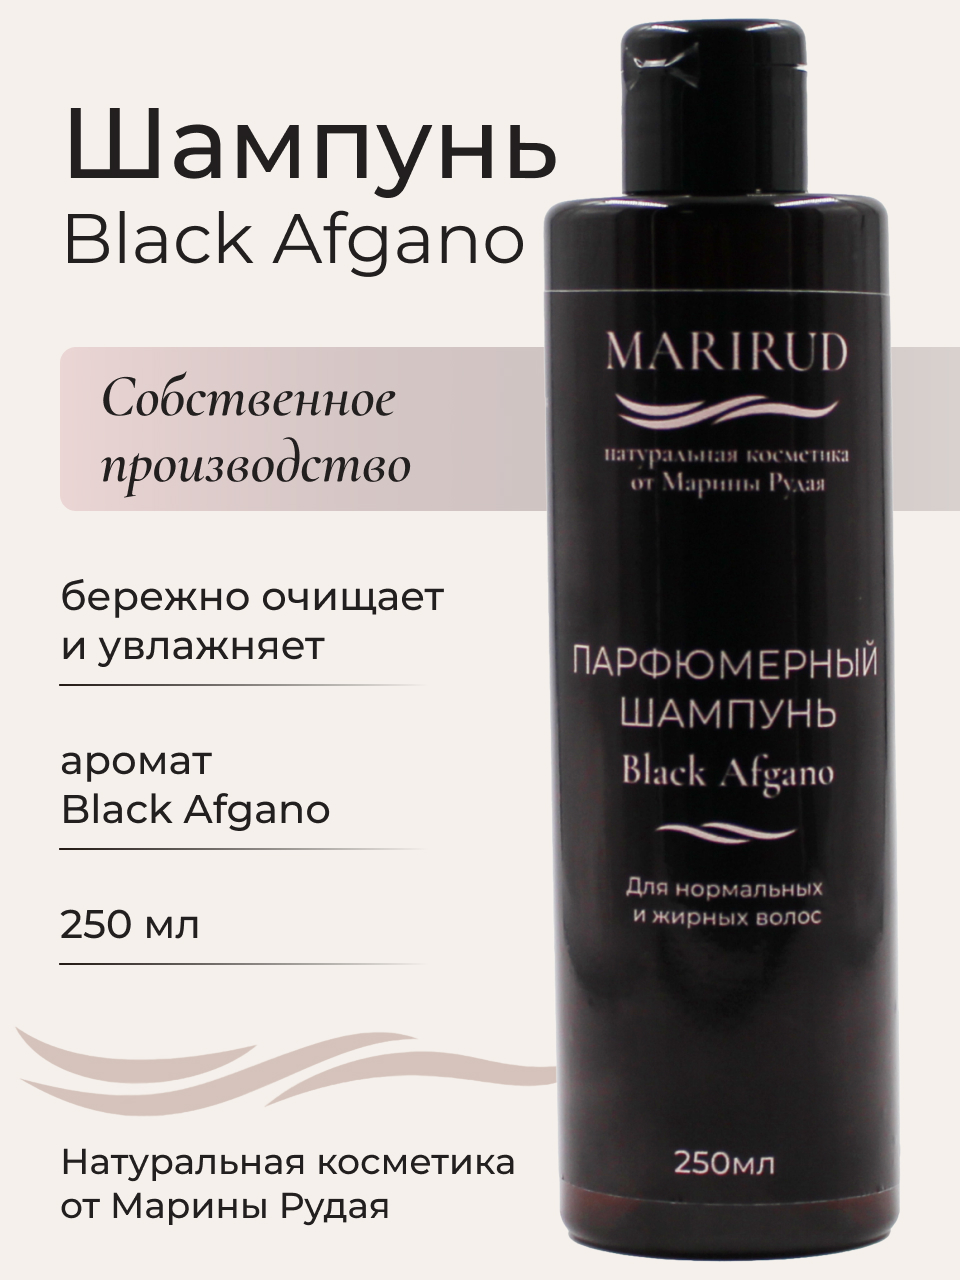 Набор парфюмерный- Шампуни Black Afgano и Tobacco Vanille rosso afgano